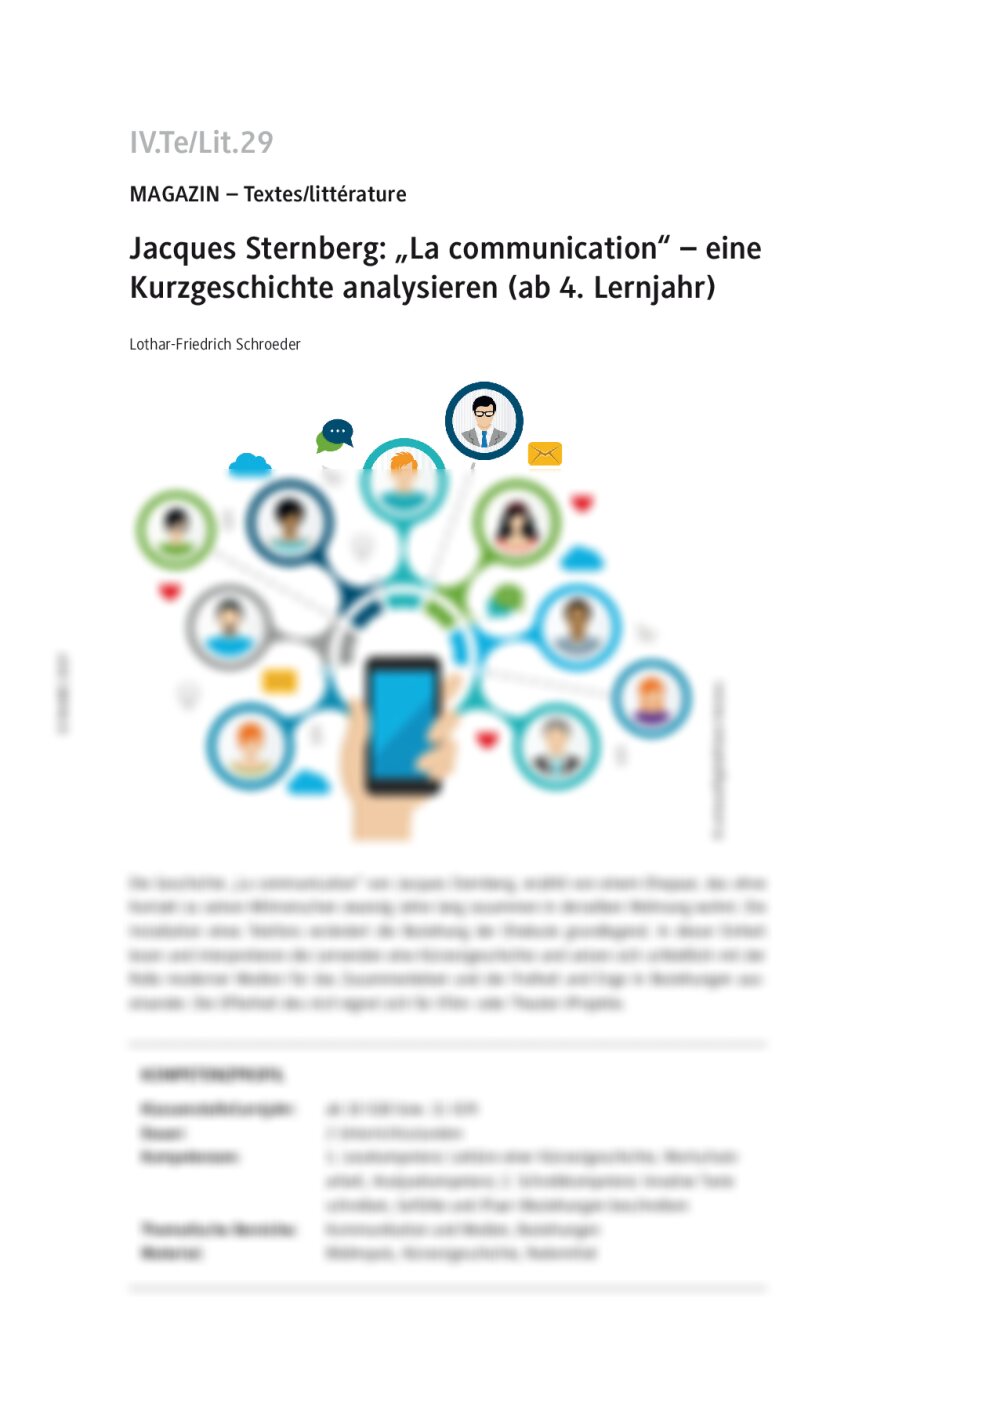 Jacques Sternbergs Kurzgeschichte „La communication“ analysieren - Seite 1